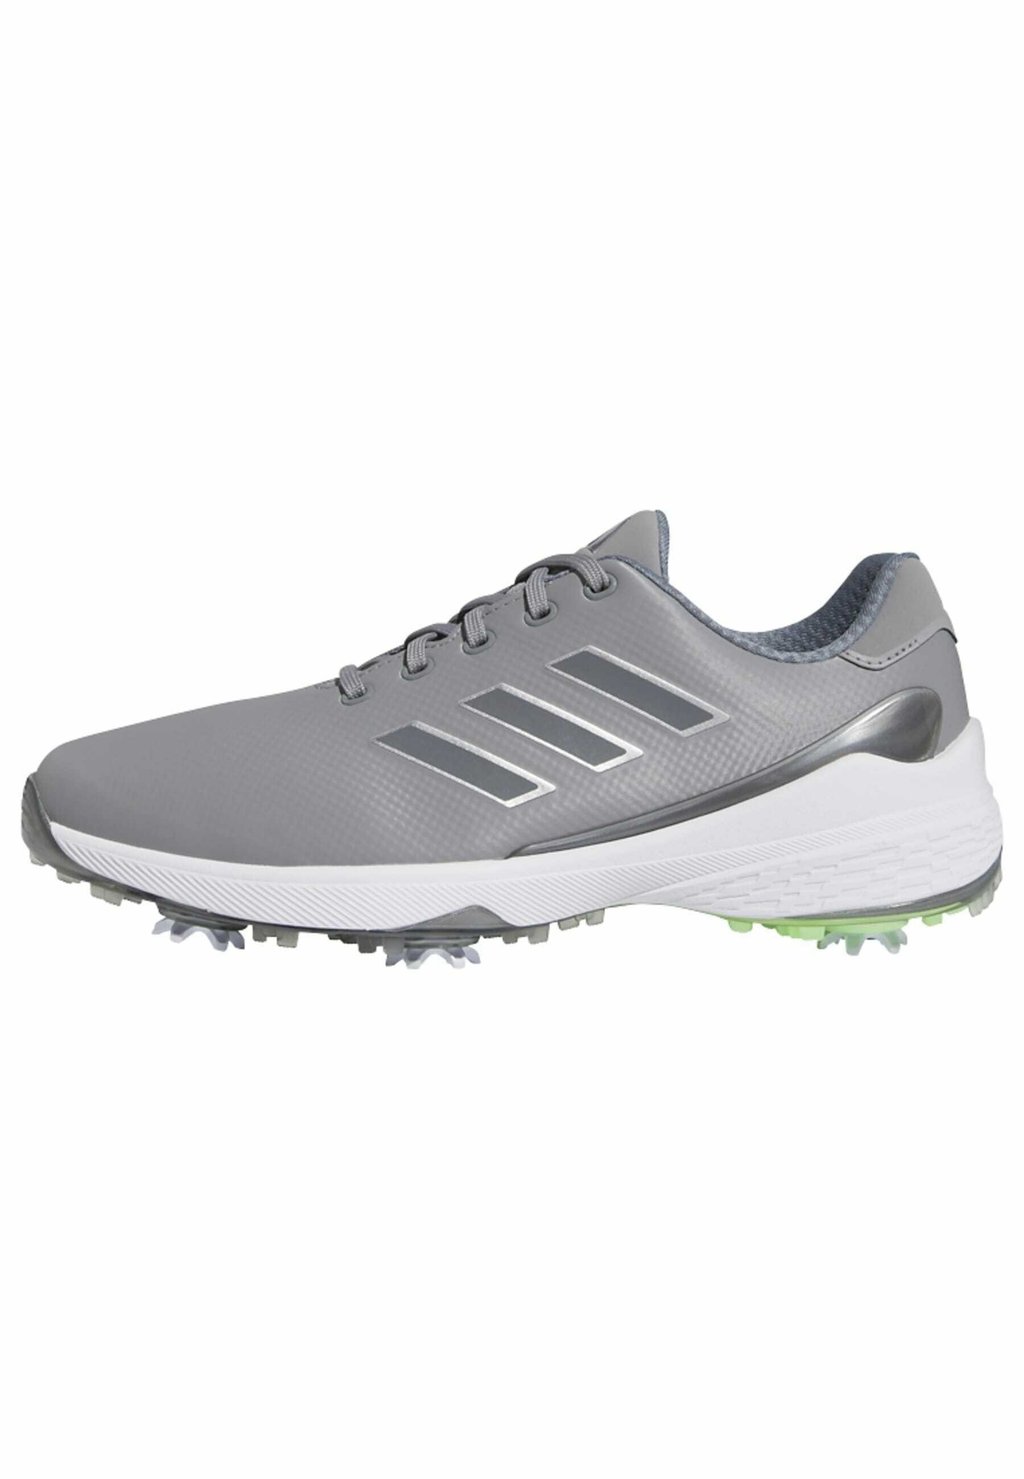 Туфли для гольфа adidas Golf, серый три железа металлик серебристый металлик сандалии adidas adilette comfort slides цвет vision metallic vision metallic grey